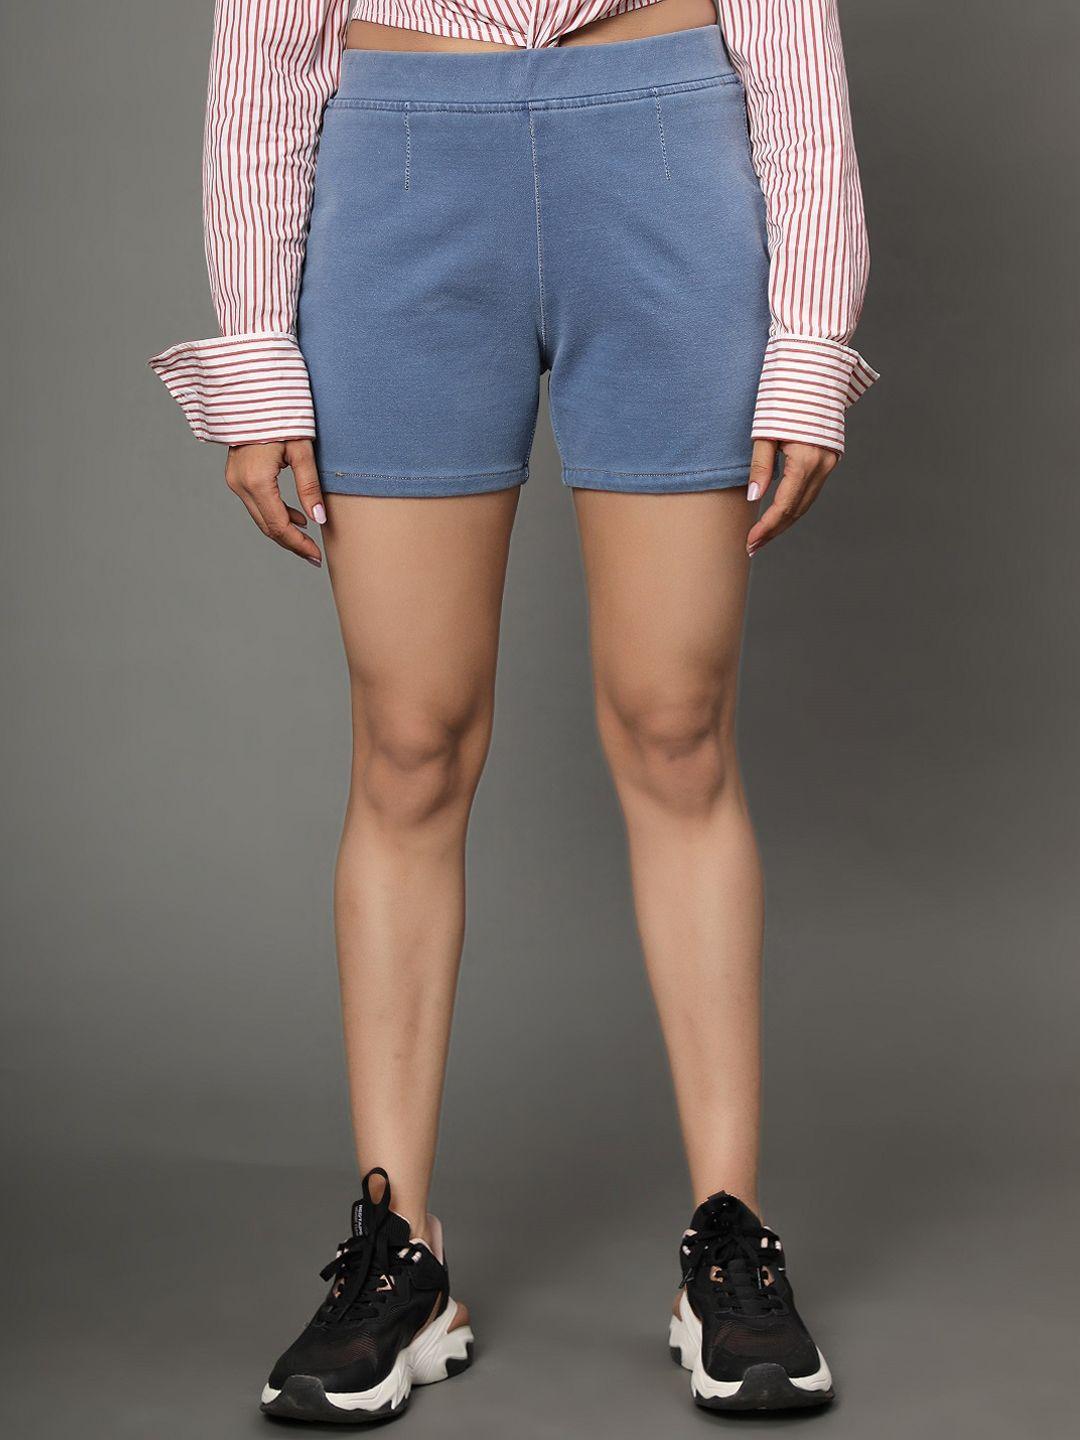 angelfab-women-high-rise-slip-on-denim-shorts